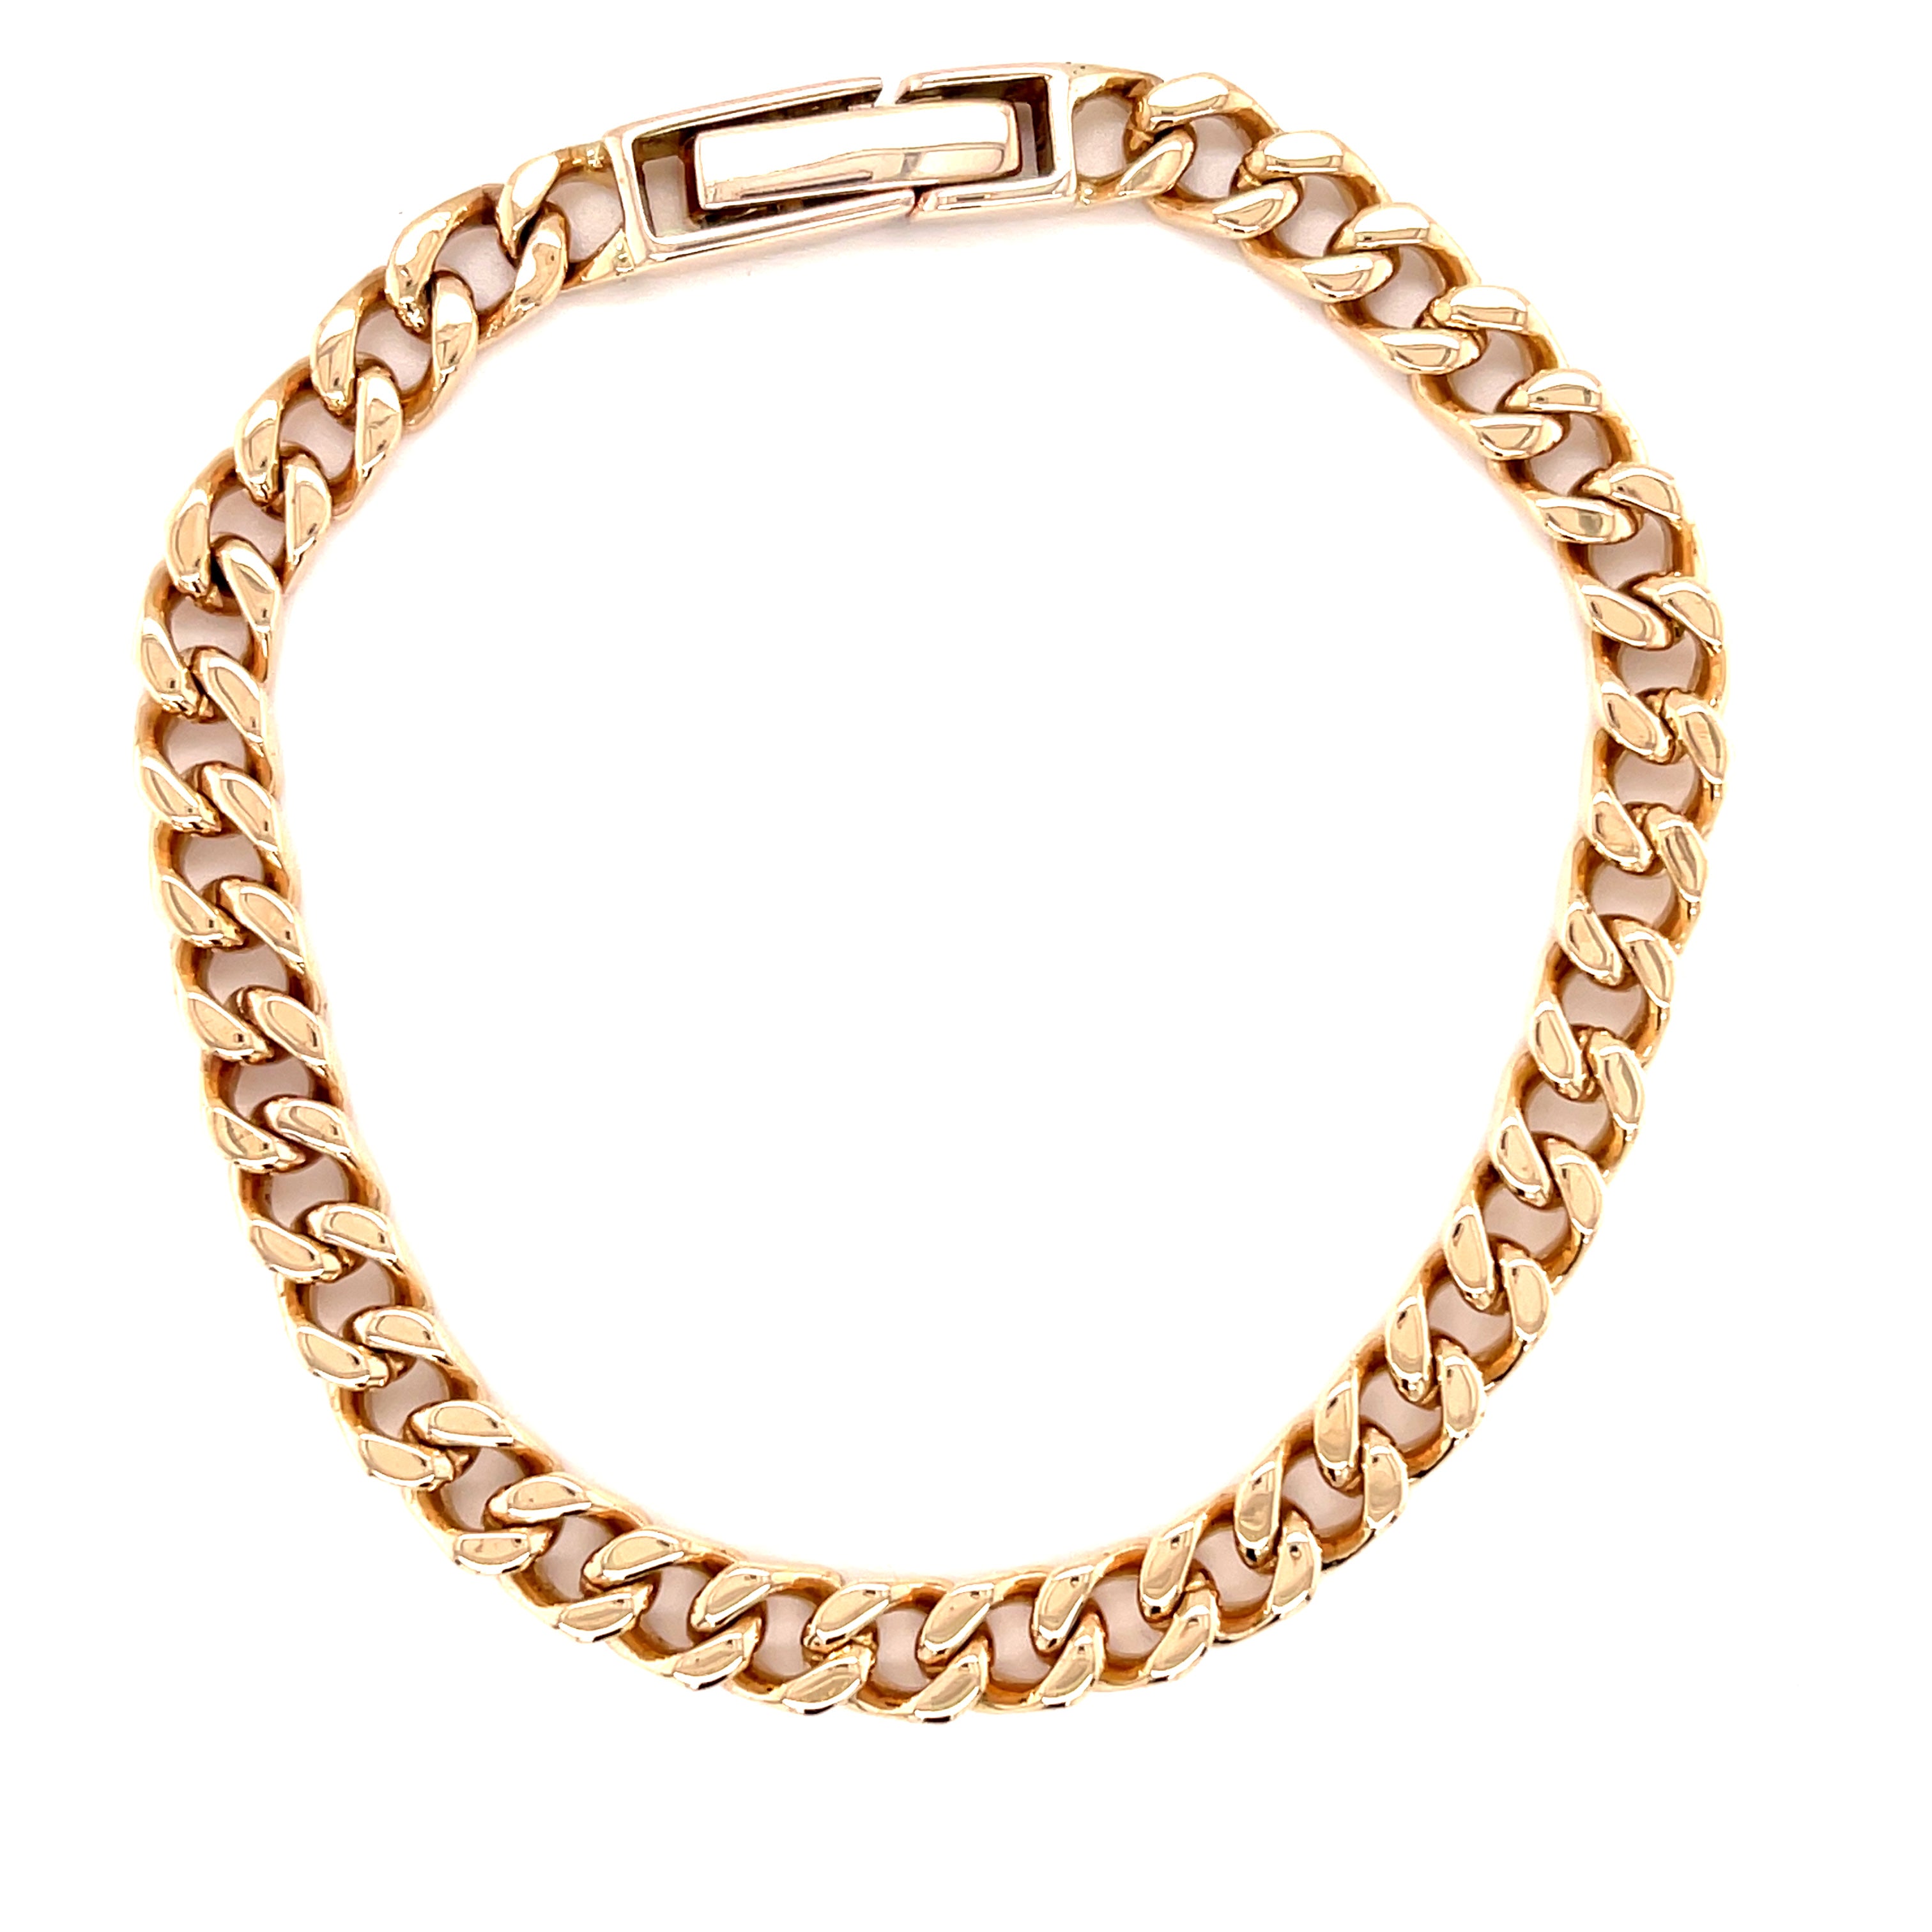 9ct Yellow Gold 8.5" Flat Edge Curb Link Bracelet - 24.55g